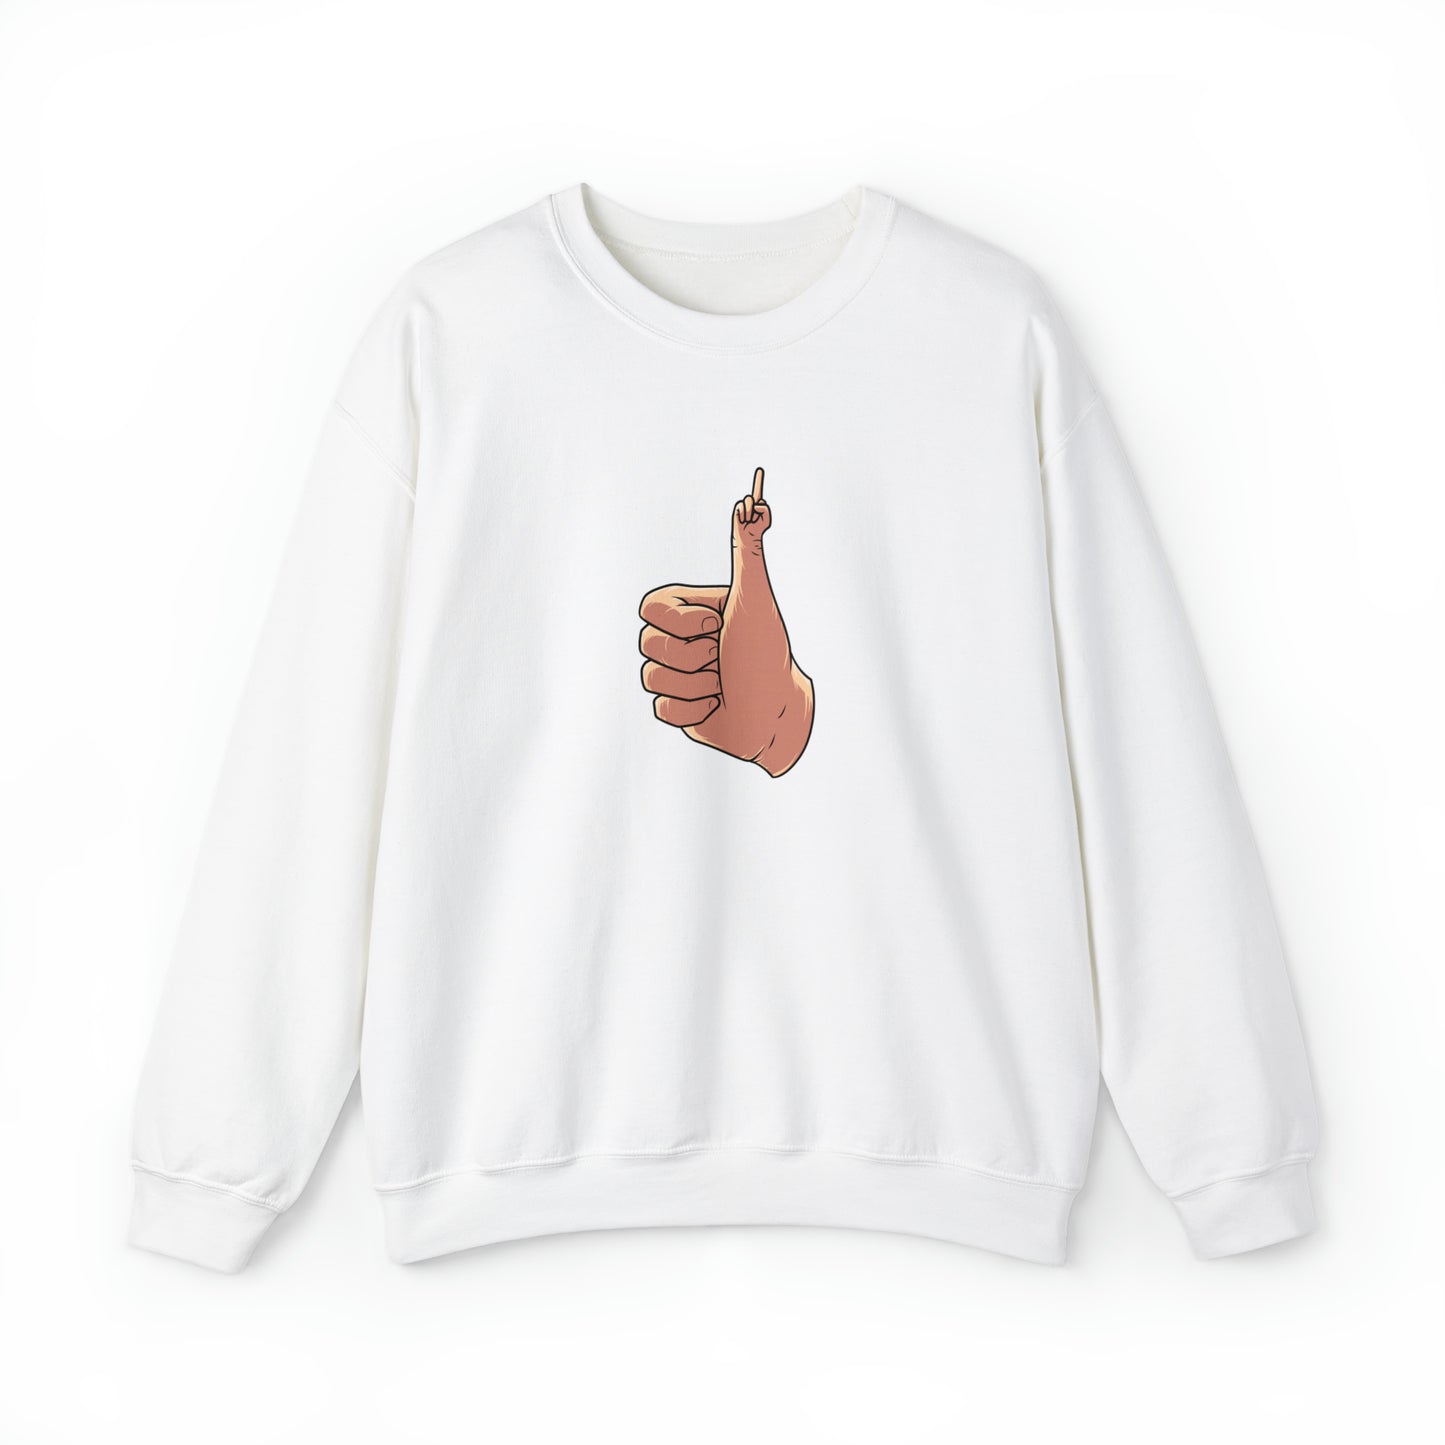 Custom Parody Crewneck Sweatshirt, Thumbs up Middle Finger Design